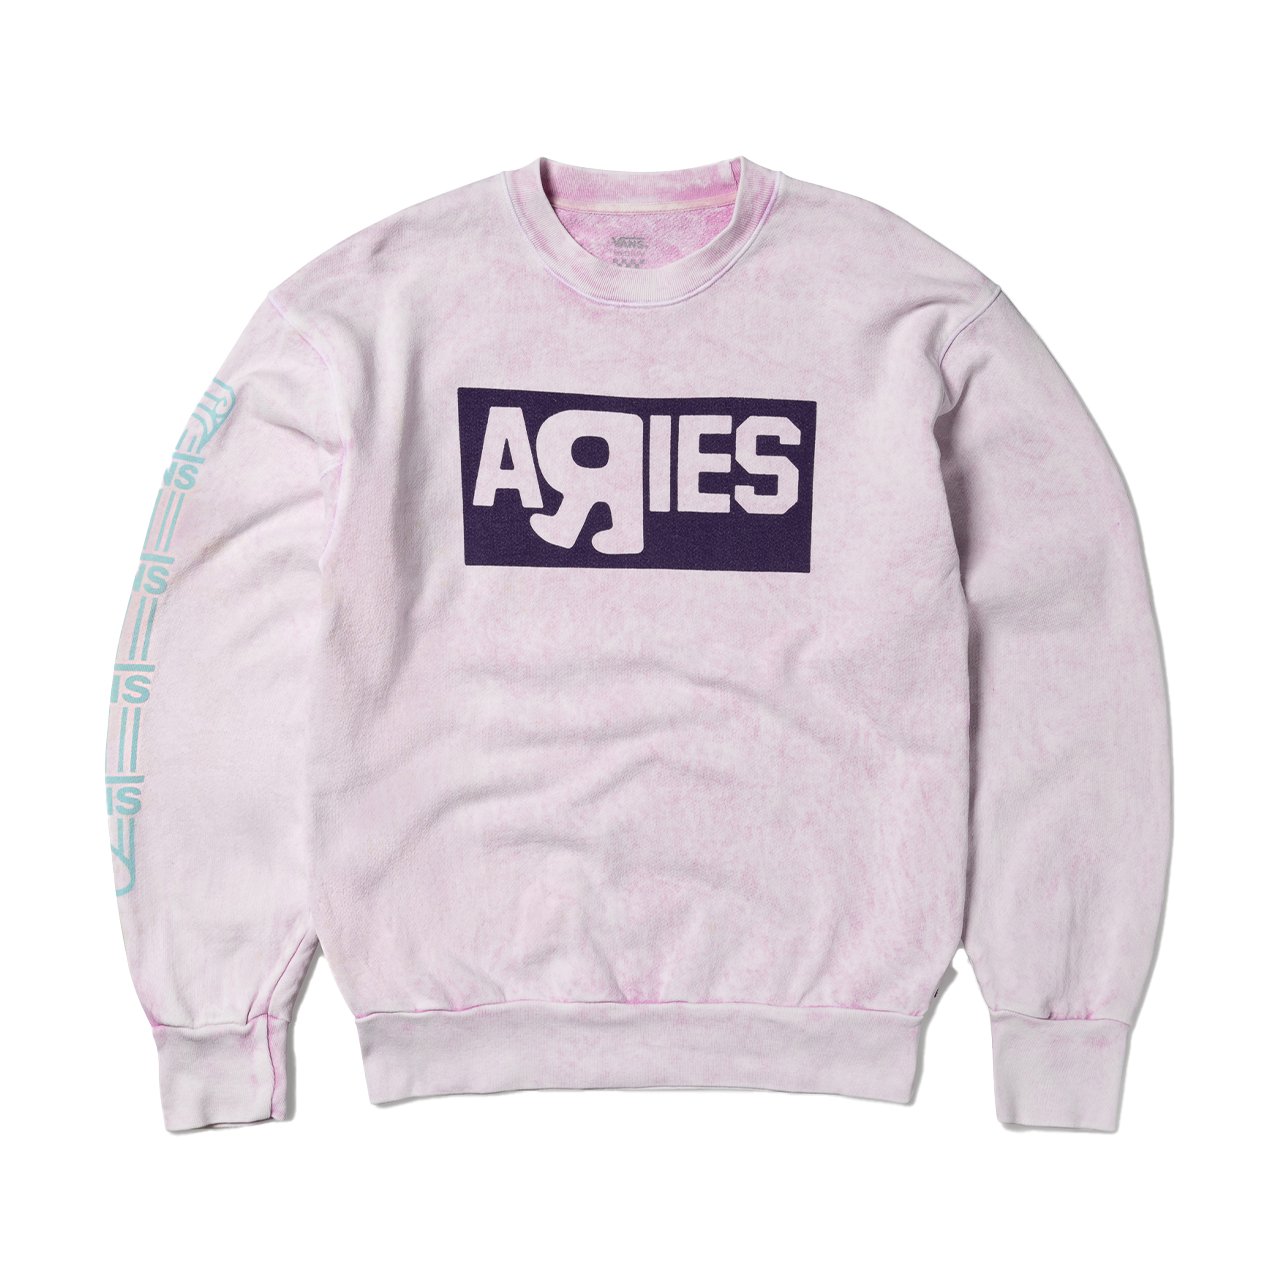 Vans Vault x Aries Women's Sweatshirt Pink VN0A5GYFZ0H1